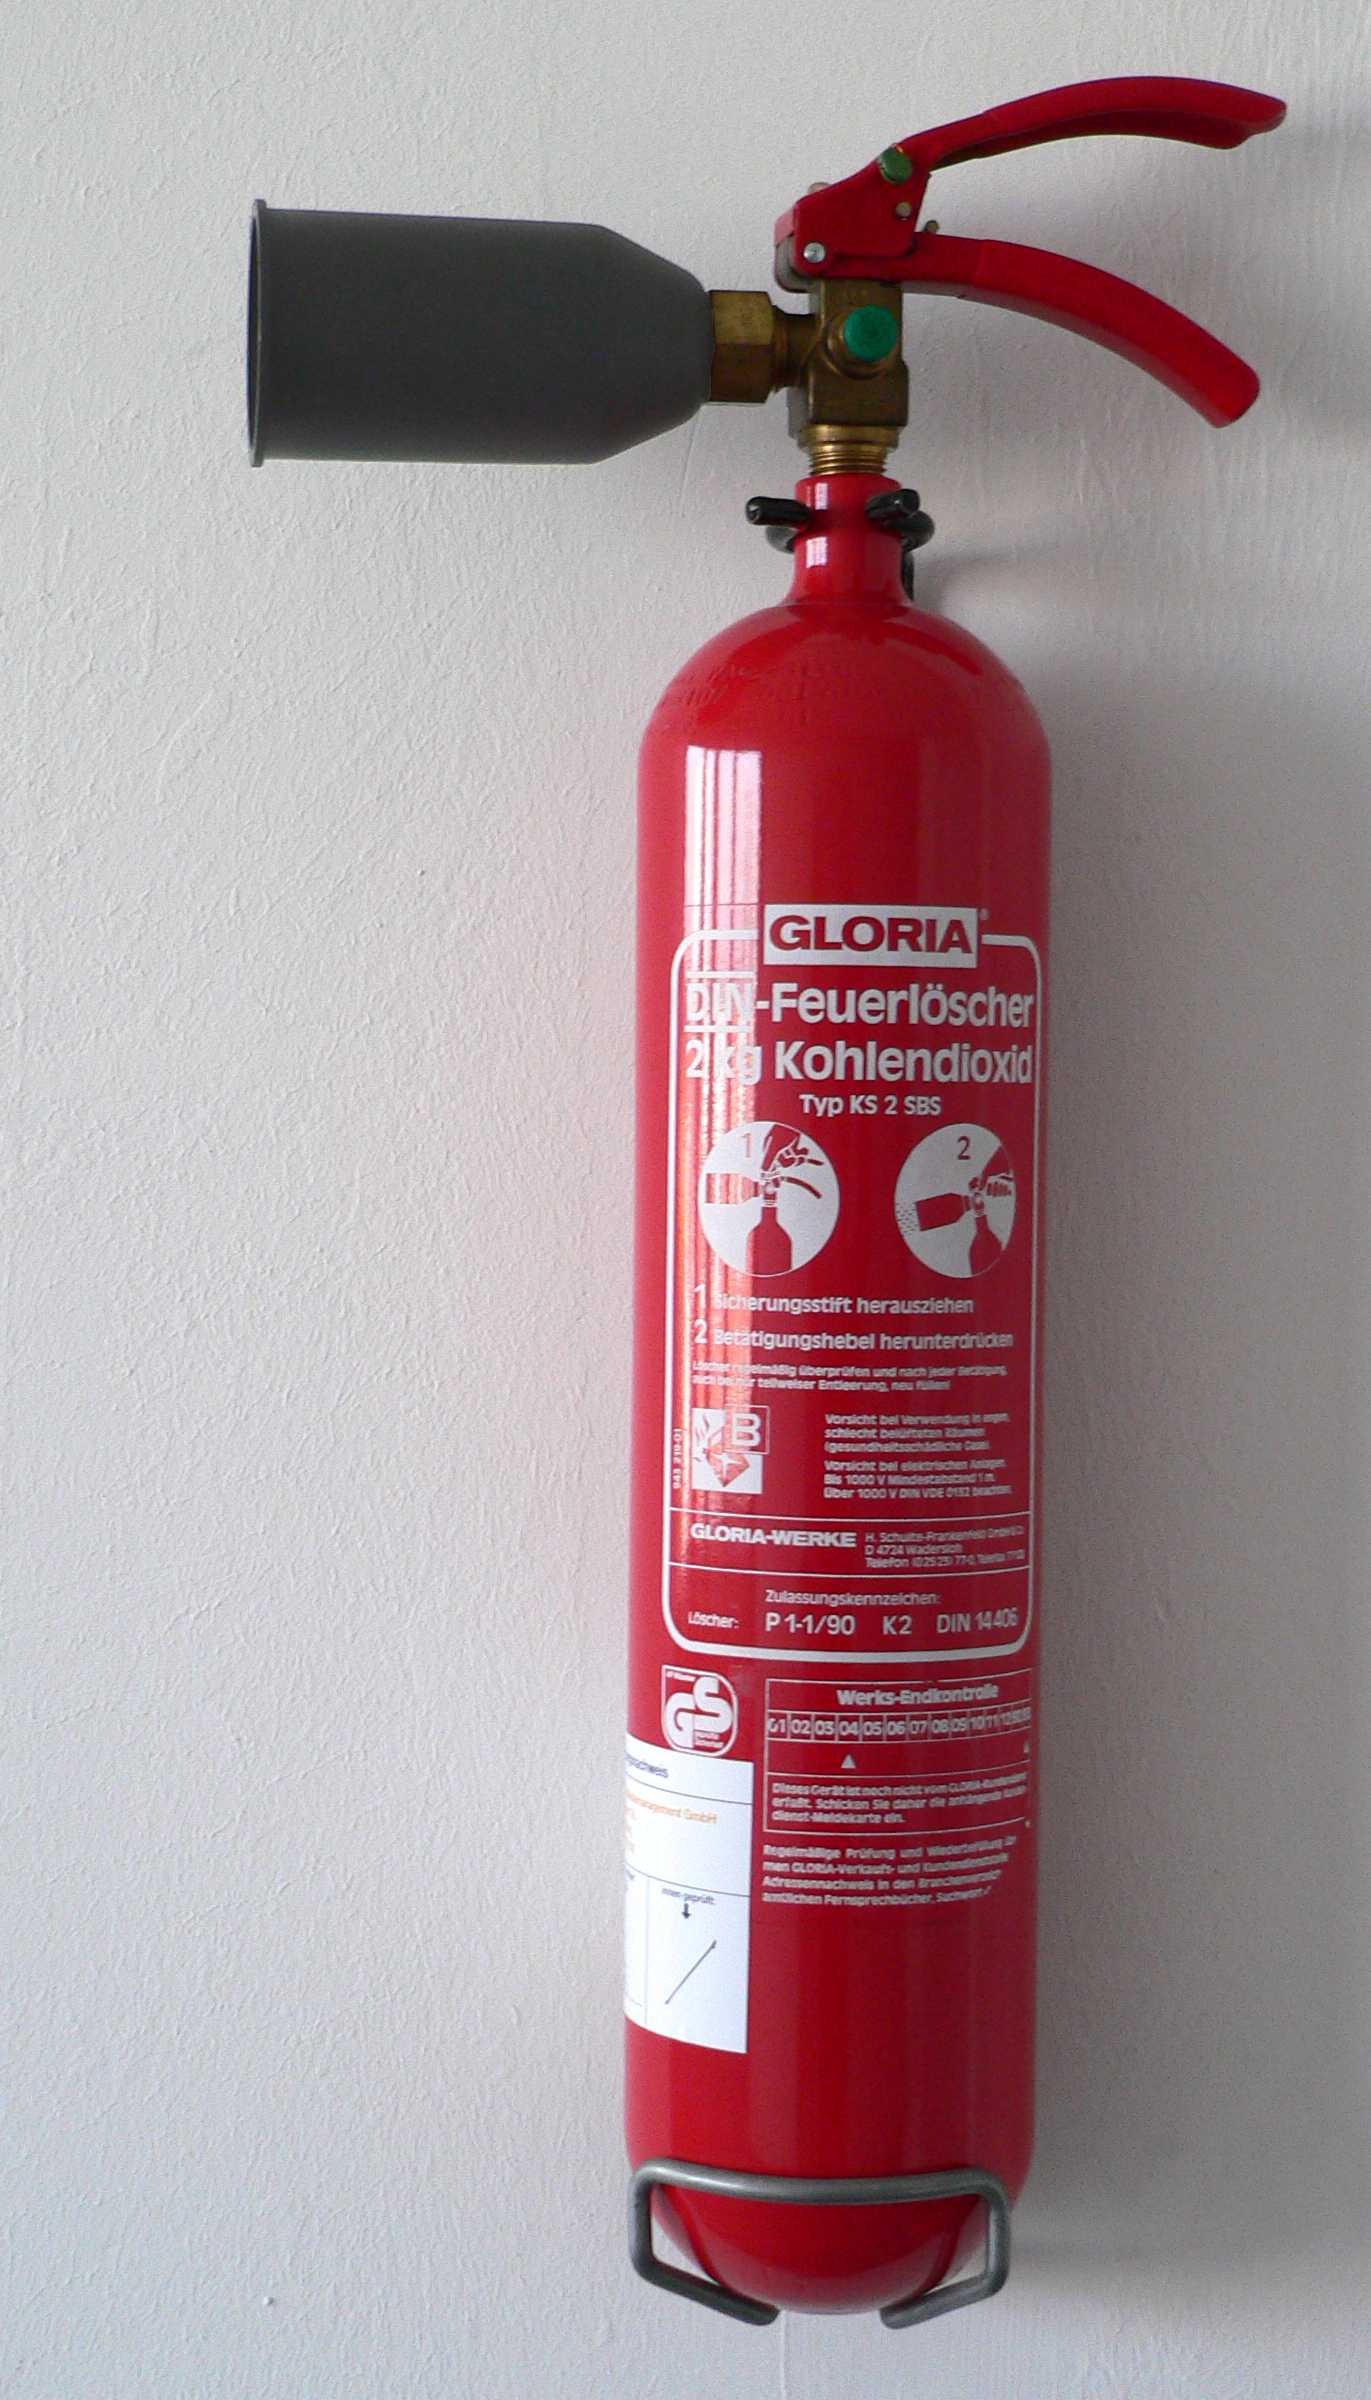 'Plan B' aka Fire Extinguisher [CC-BY-SA-4.0](https://commons.wikimedia.org/wiki/File:Feuerloescher_fcm.jpg)